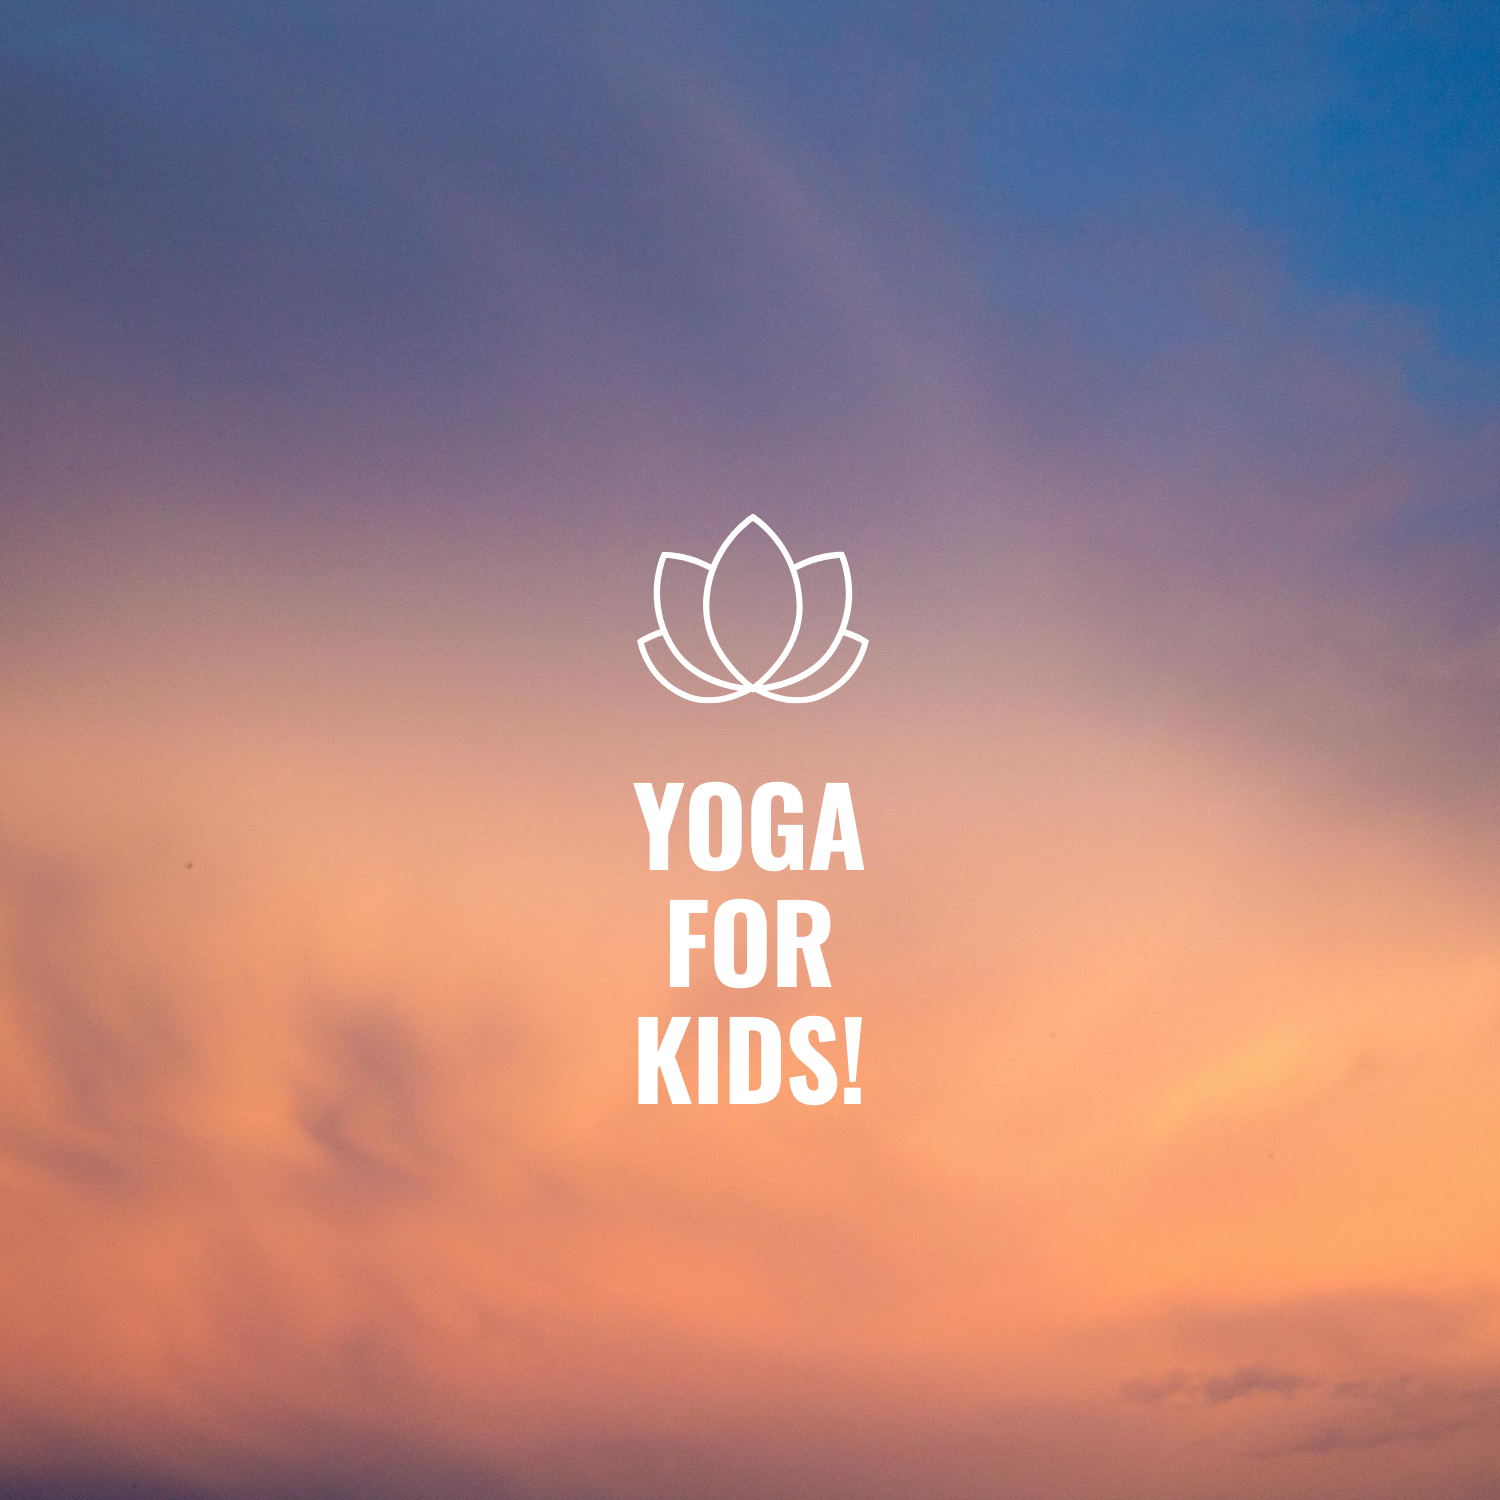 Yoga for Kids - Let's Twist